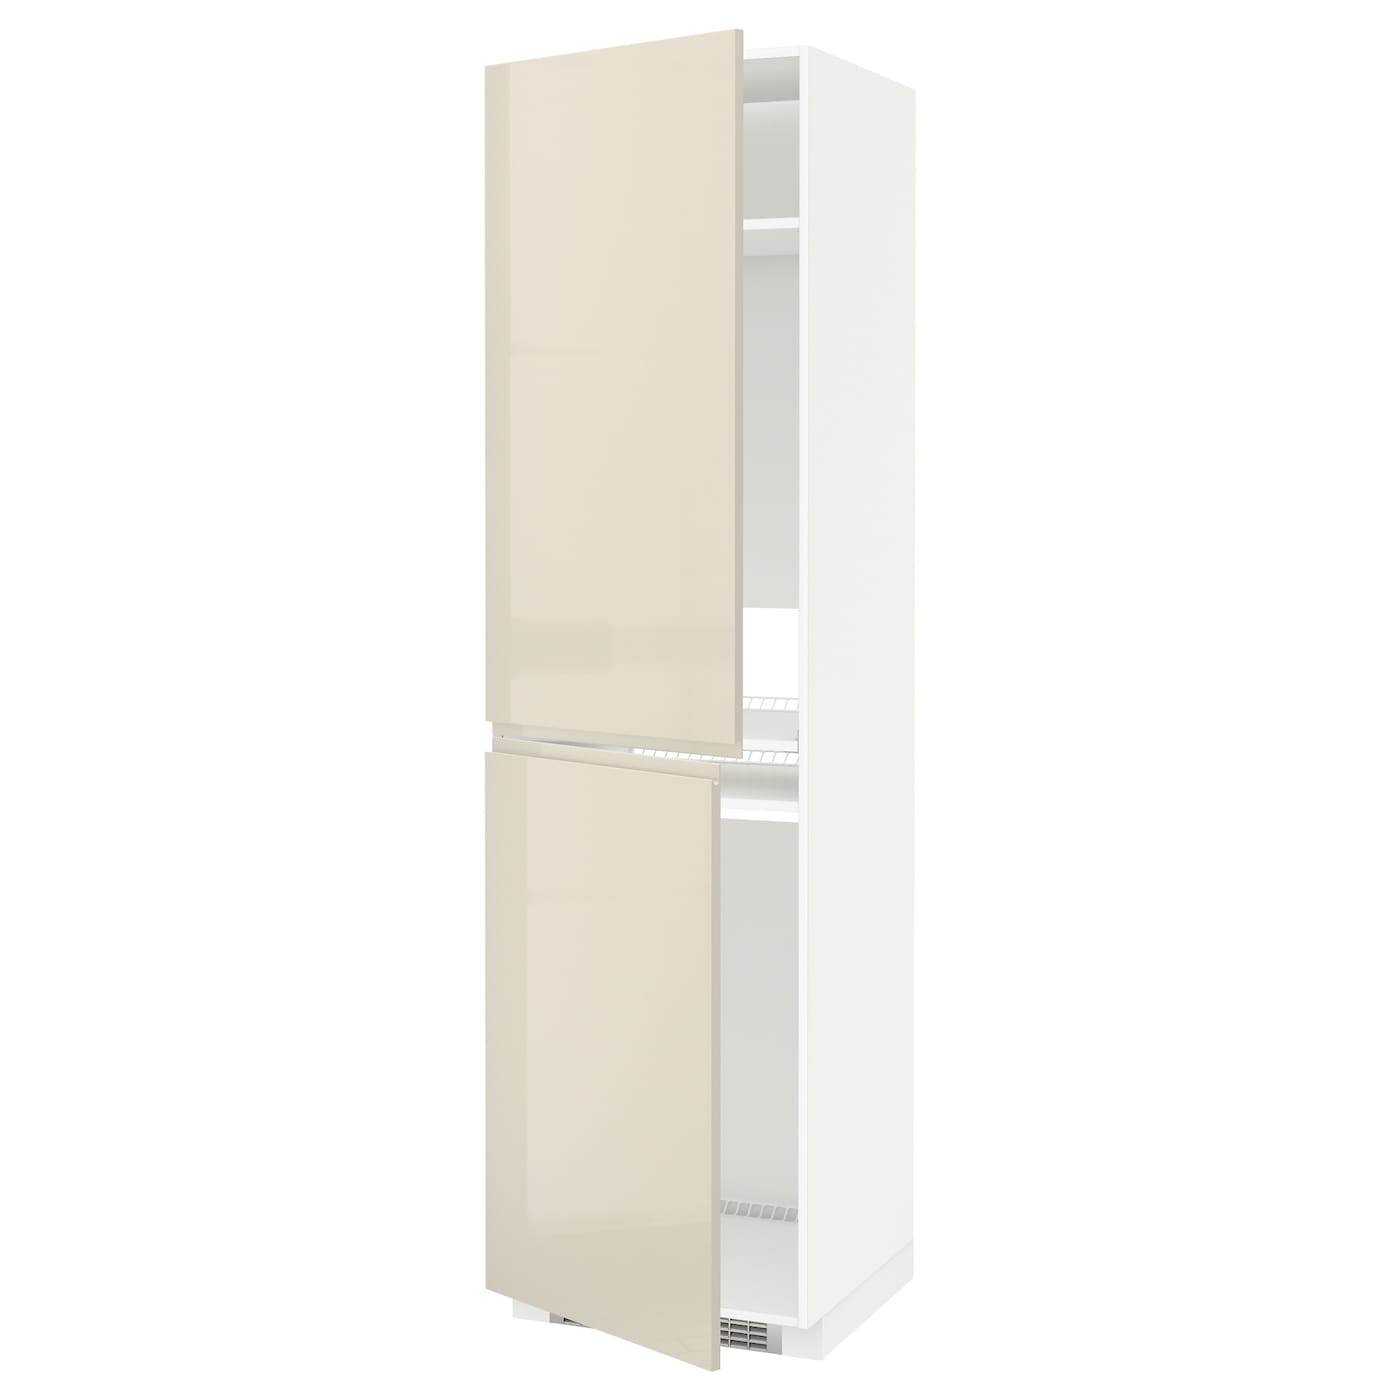 Высокий кухонный шкаф - IKEA METOD/МЕТОД ИКЕА, 220х60х60 см, белый/бежевый глянцевый